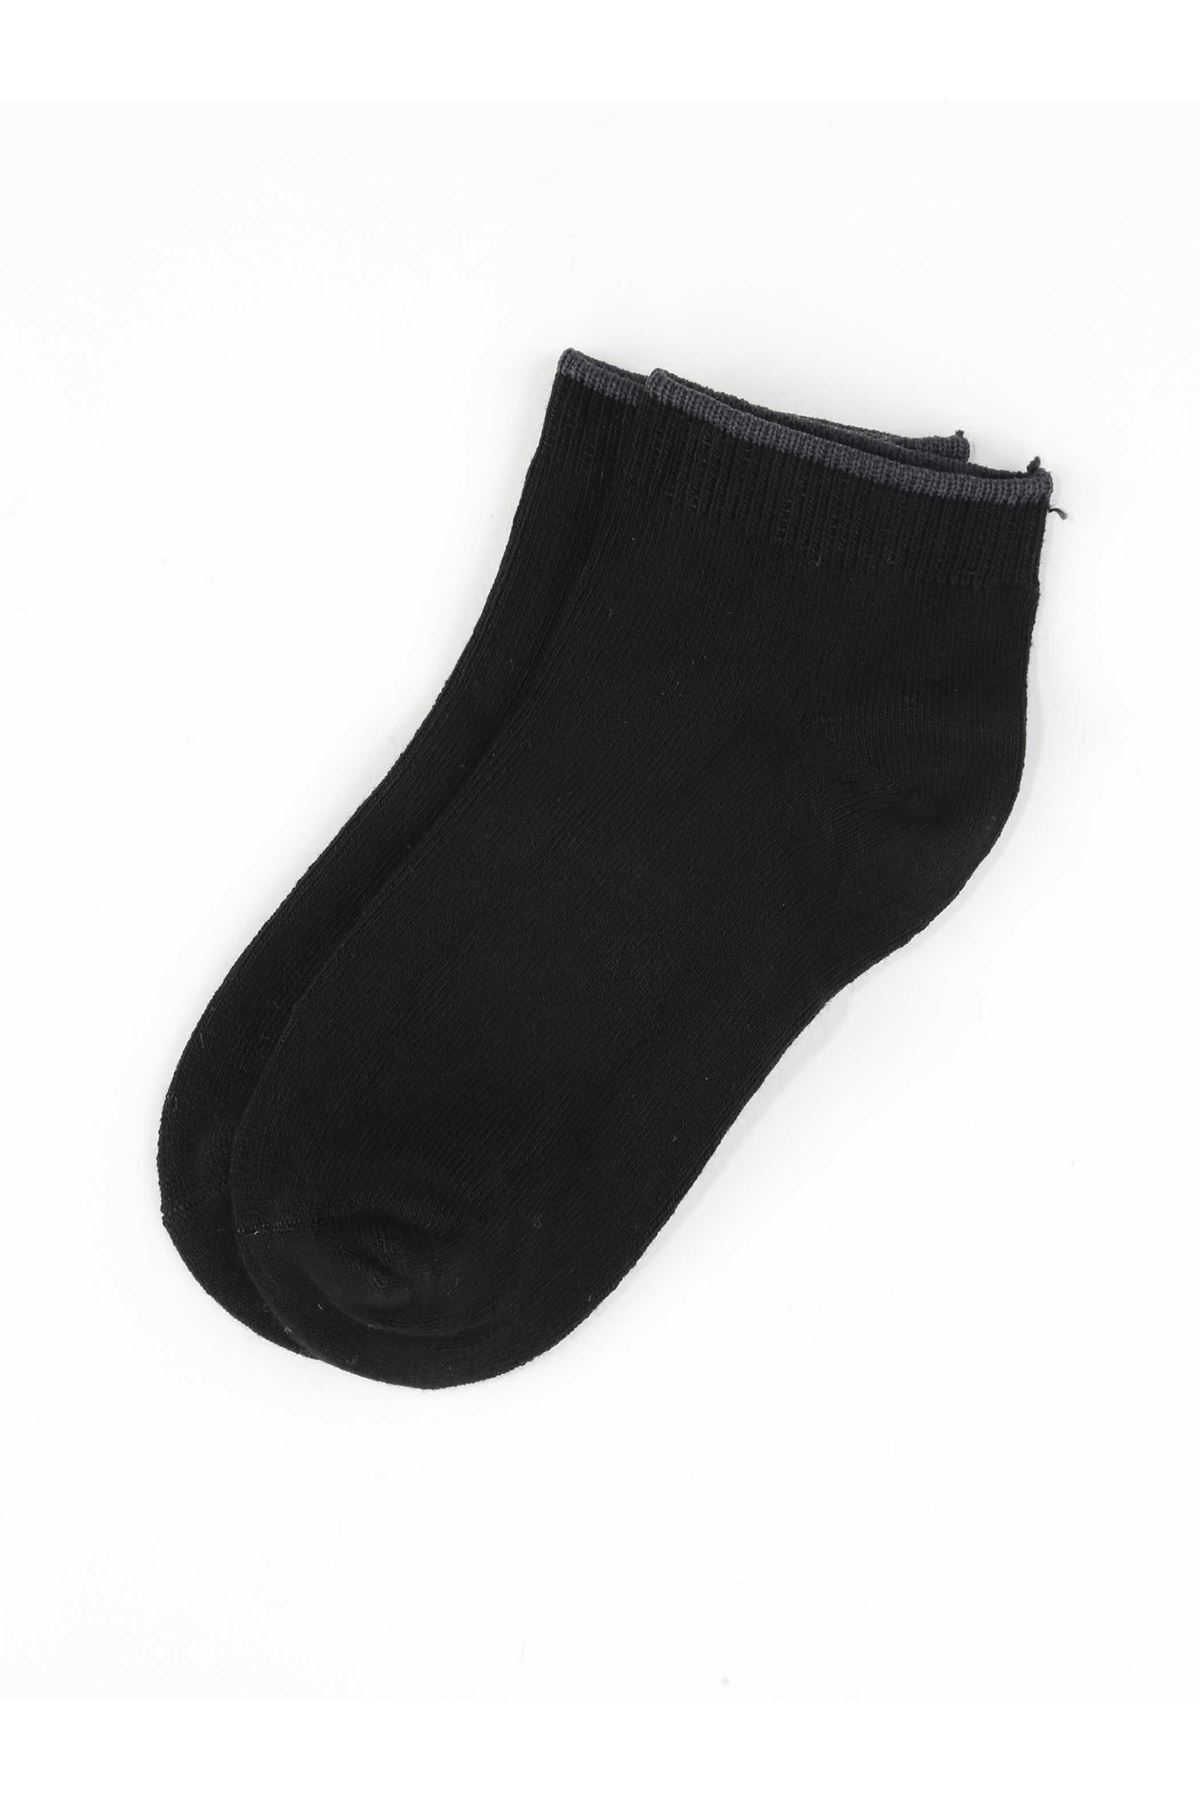 Black Bamboo Boy's Booties Socks